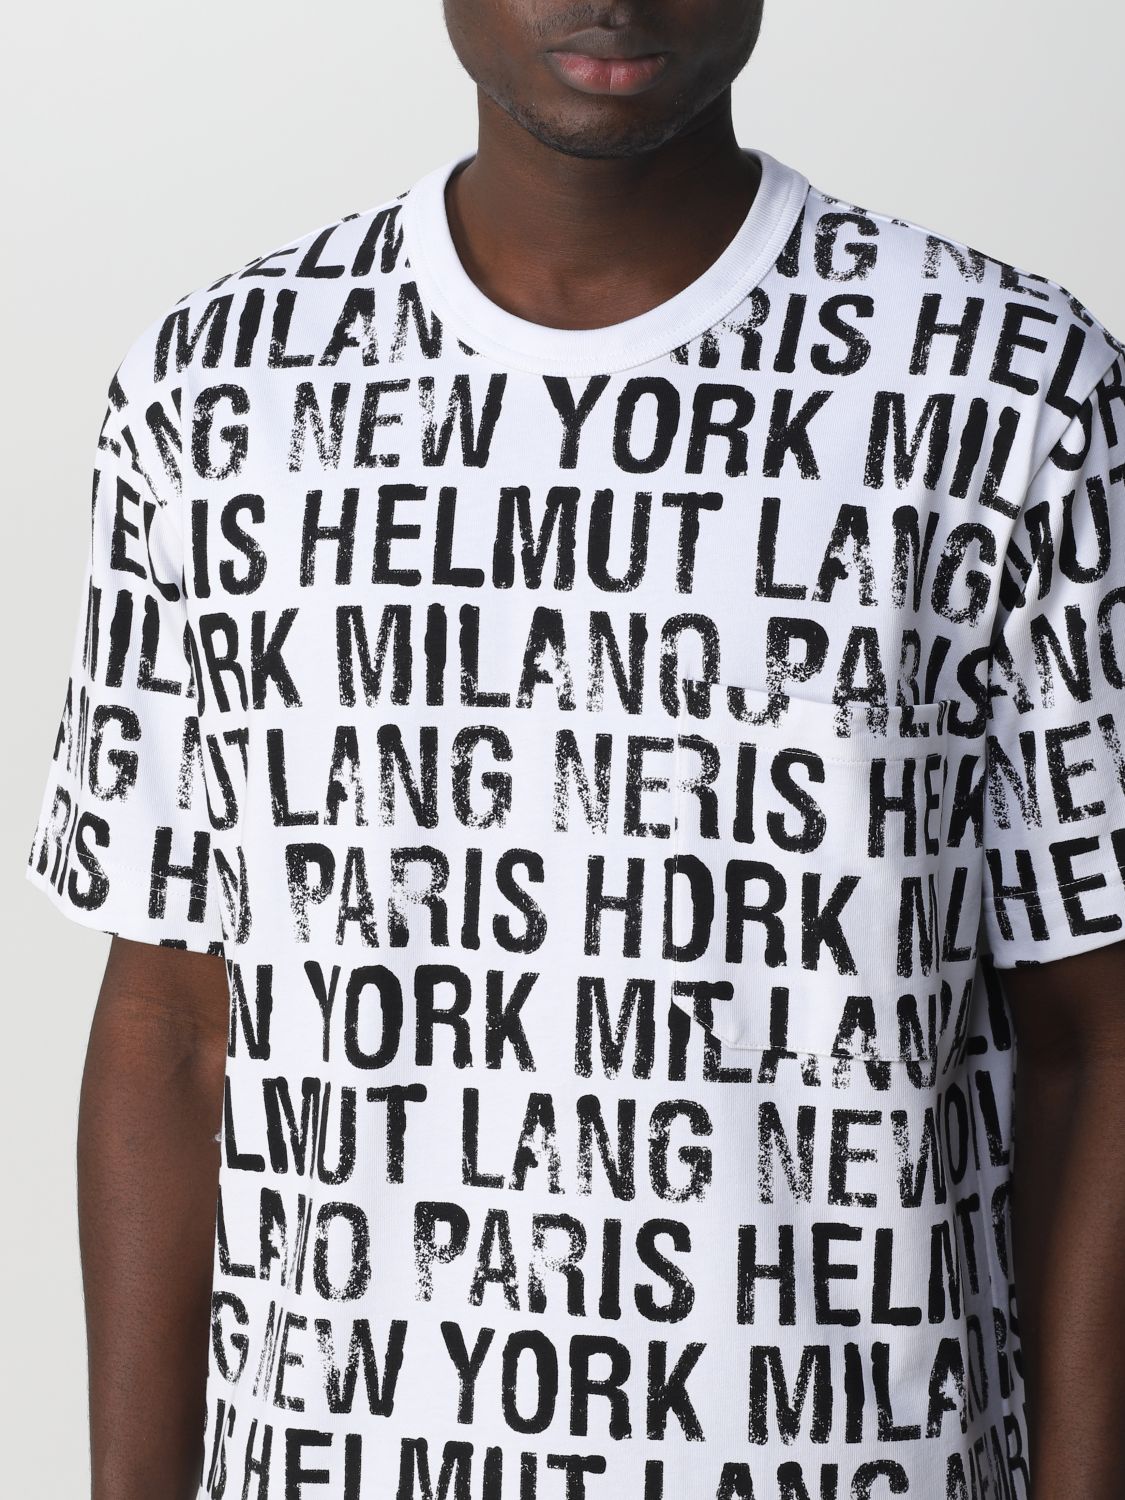 T-shirt Helmut Lang: T-shirt Helmut Lang homme blanc 4